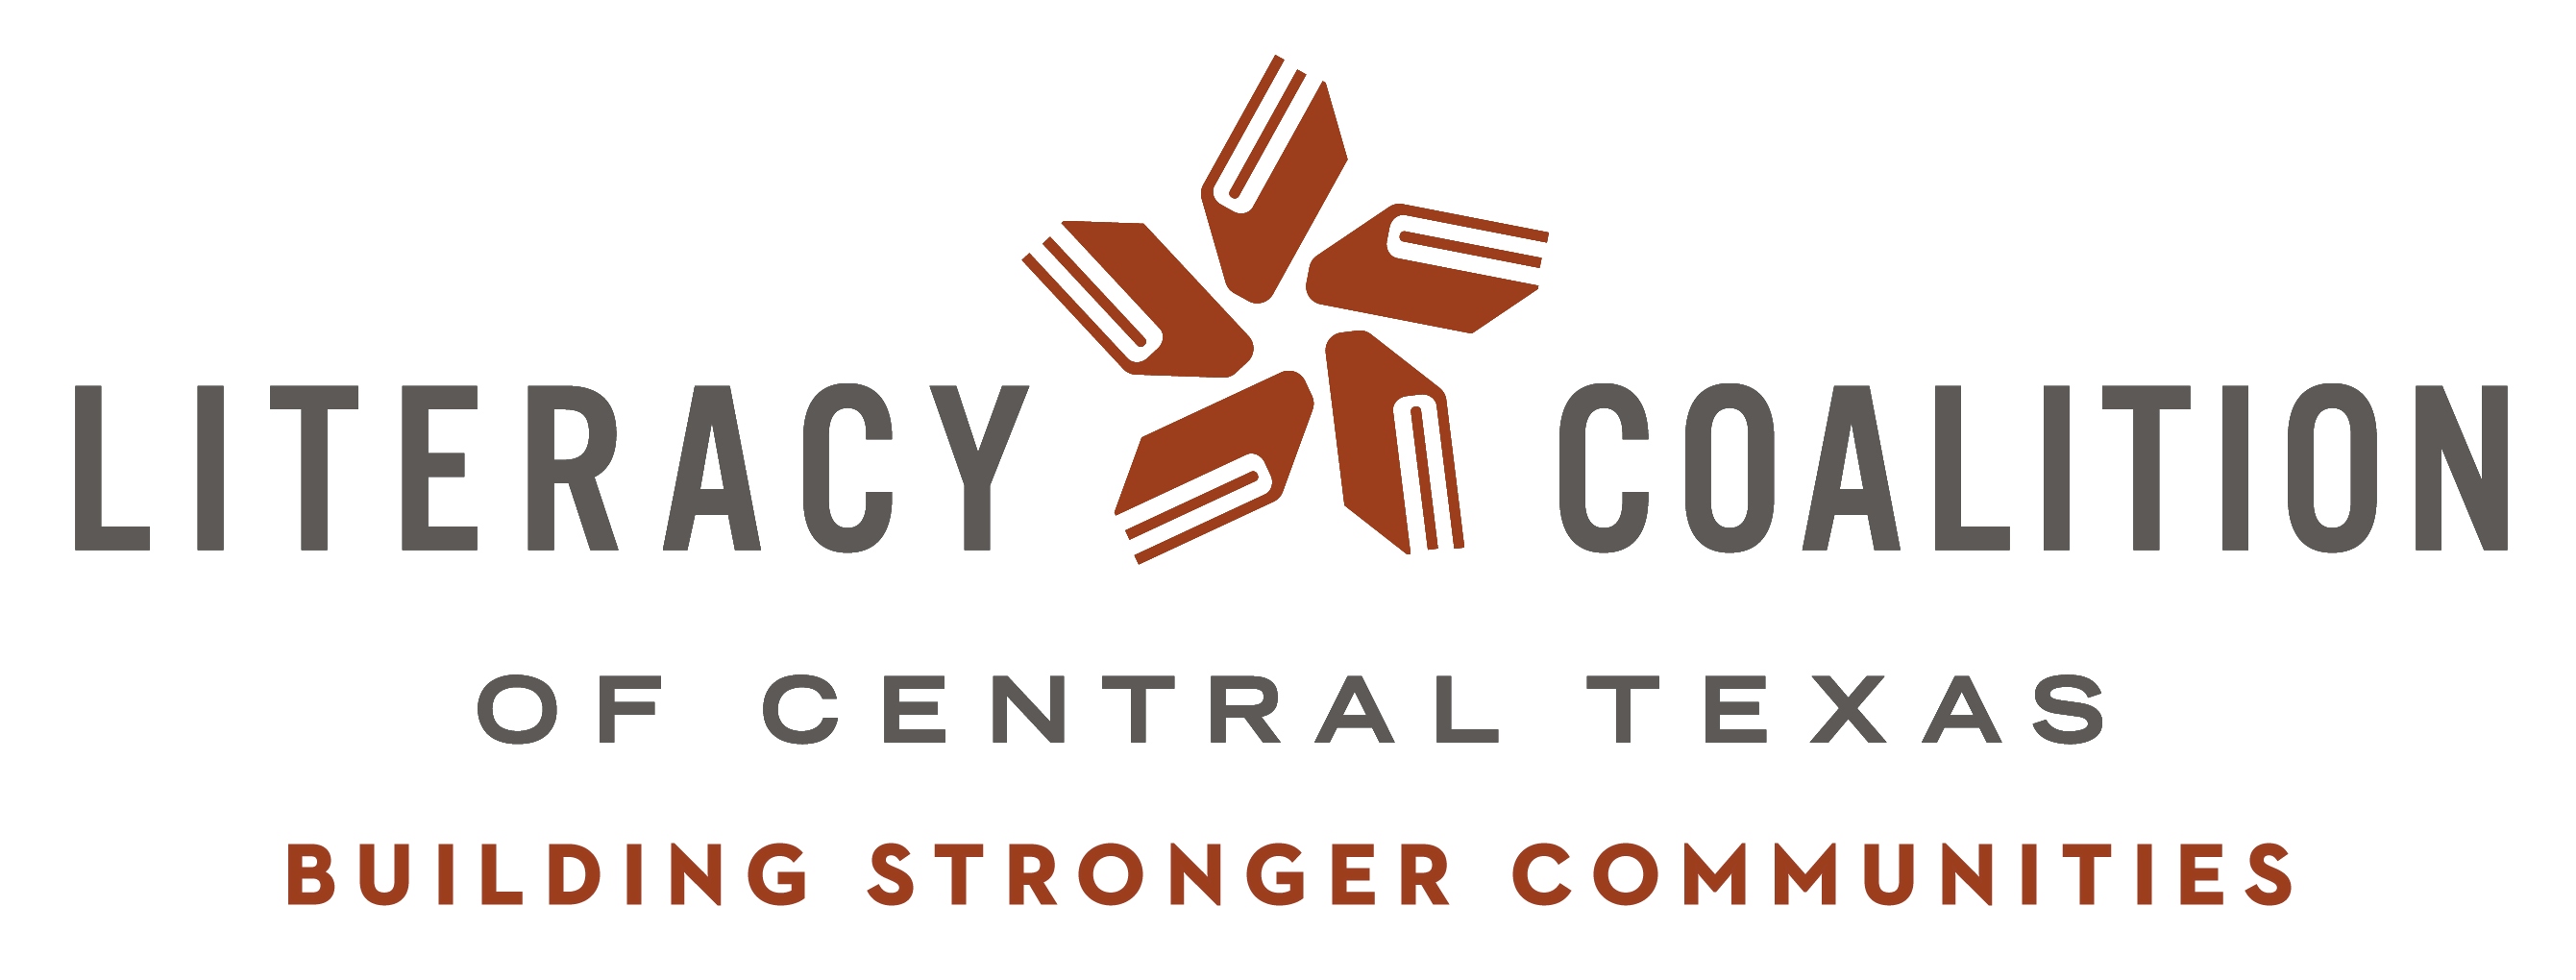 Literacy Coalition logo